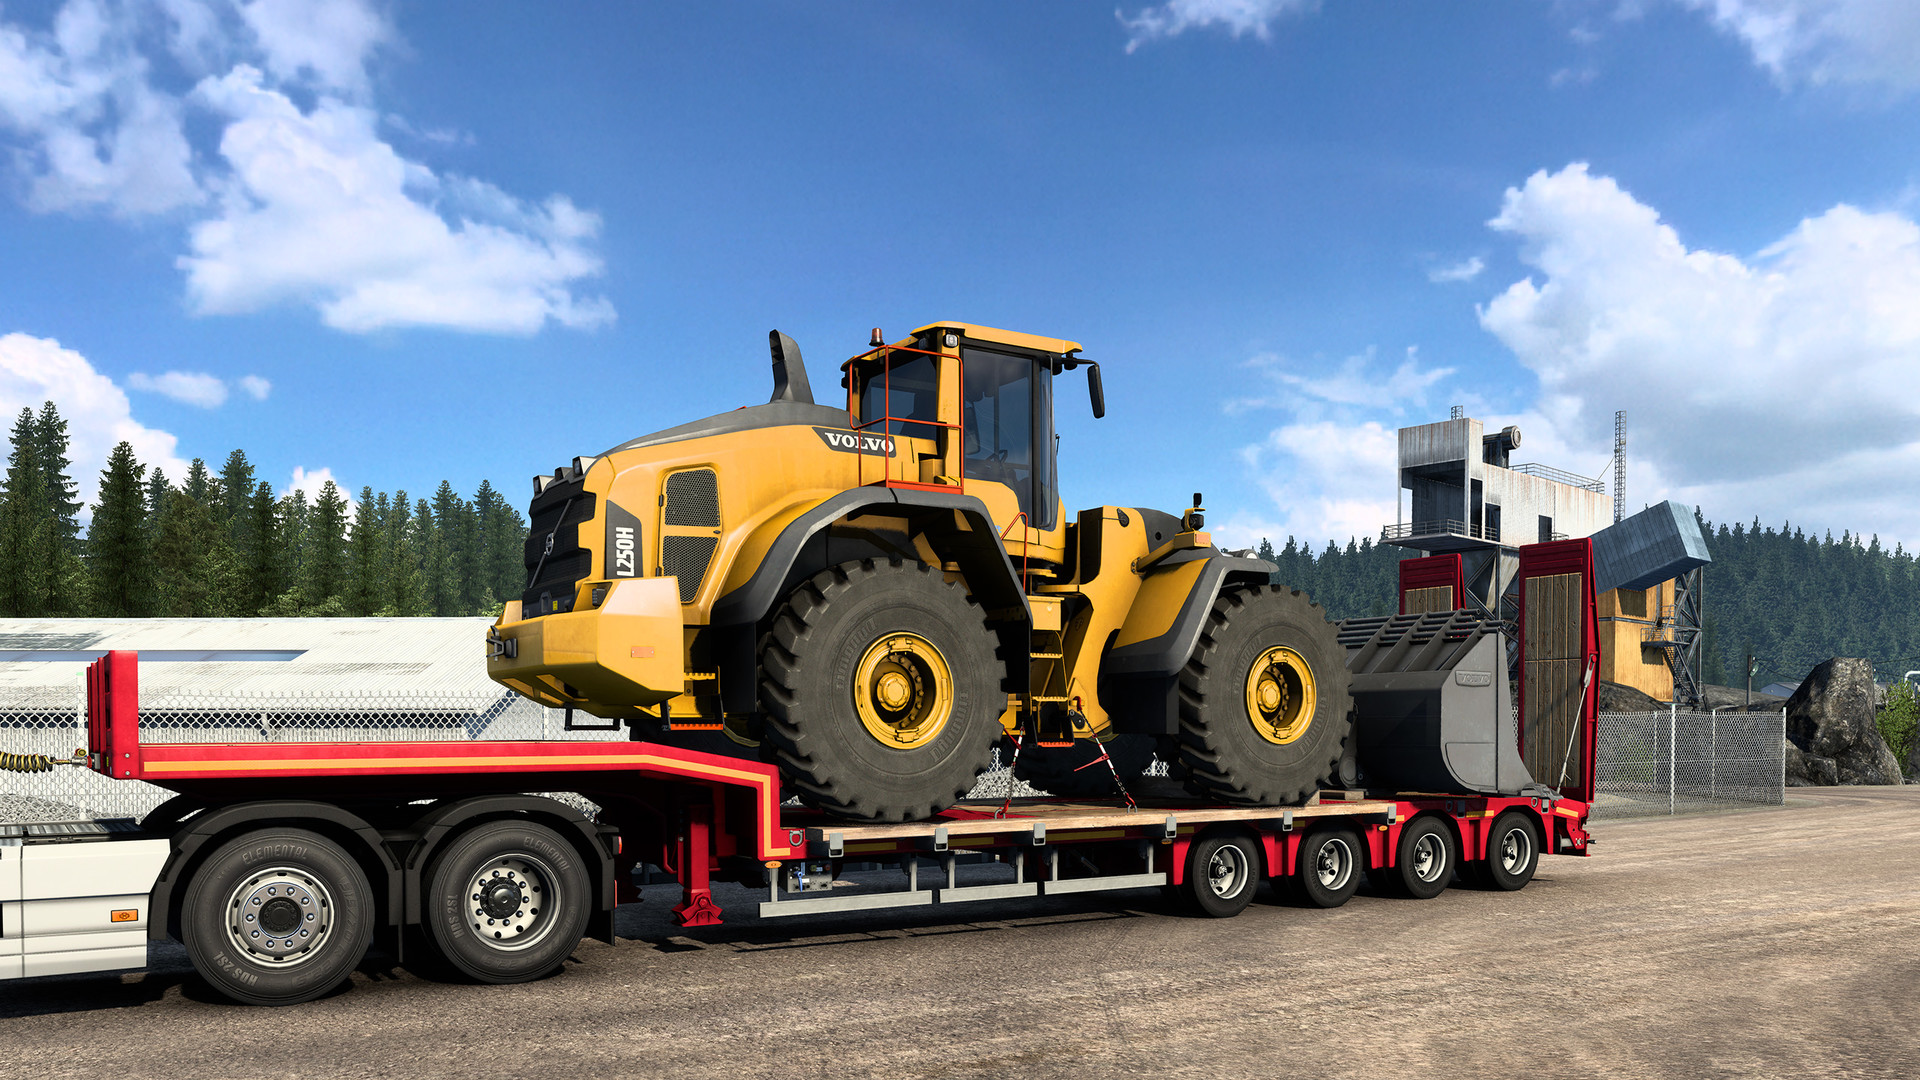 Euro Truck Simulator 2 - Volvo Construction Equipment DLC EU V2 Steam Altergift